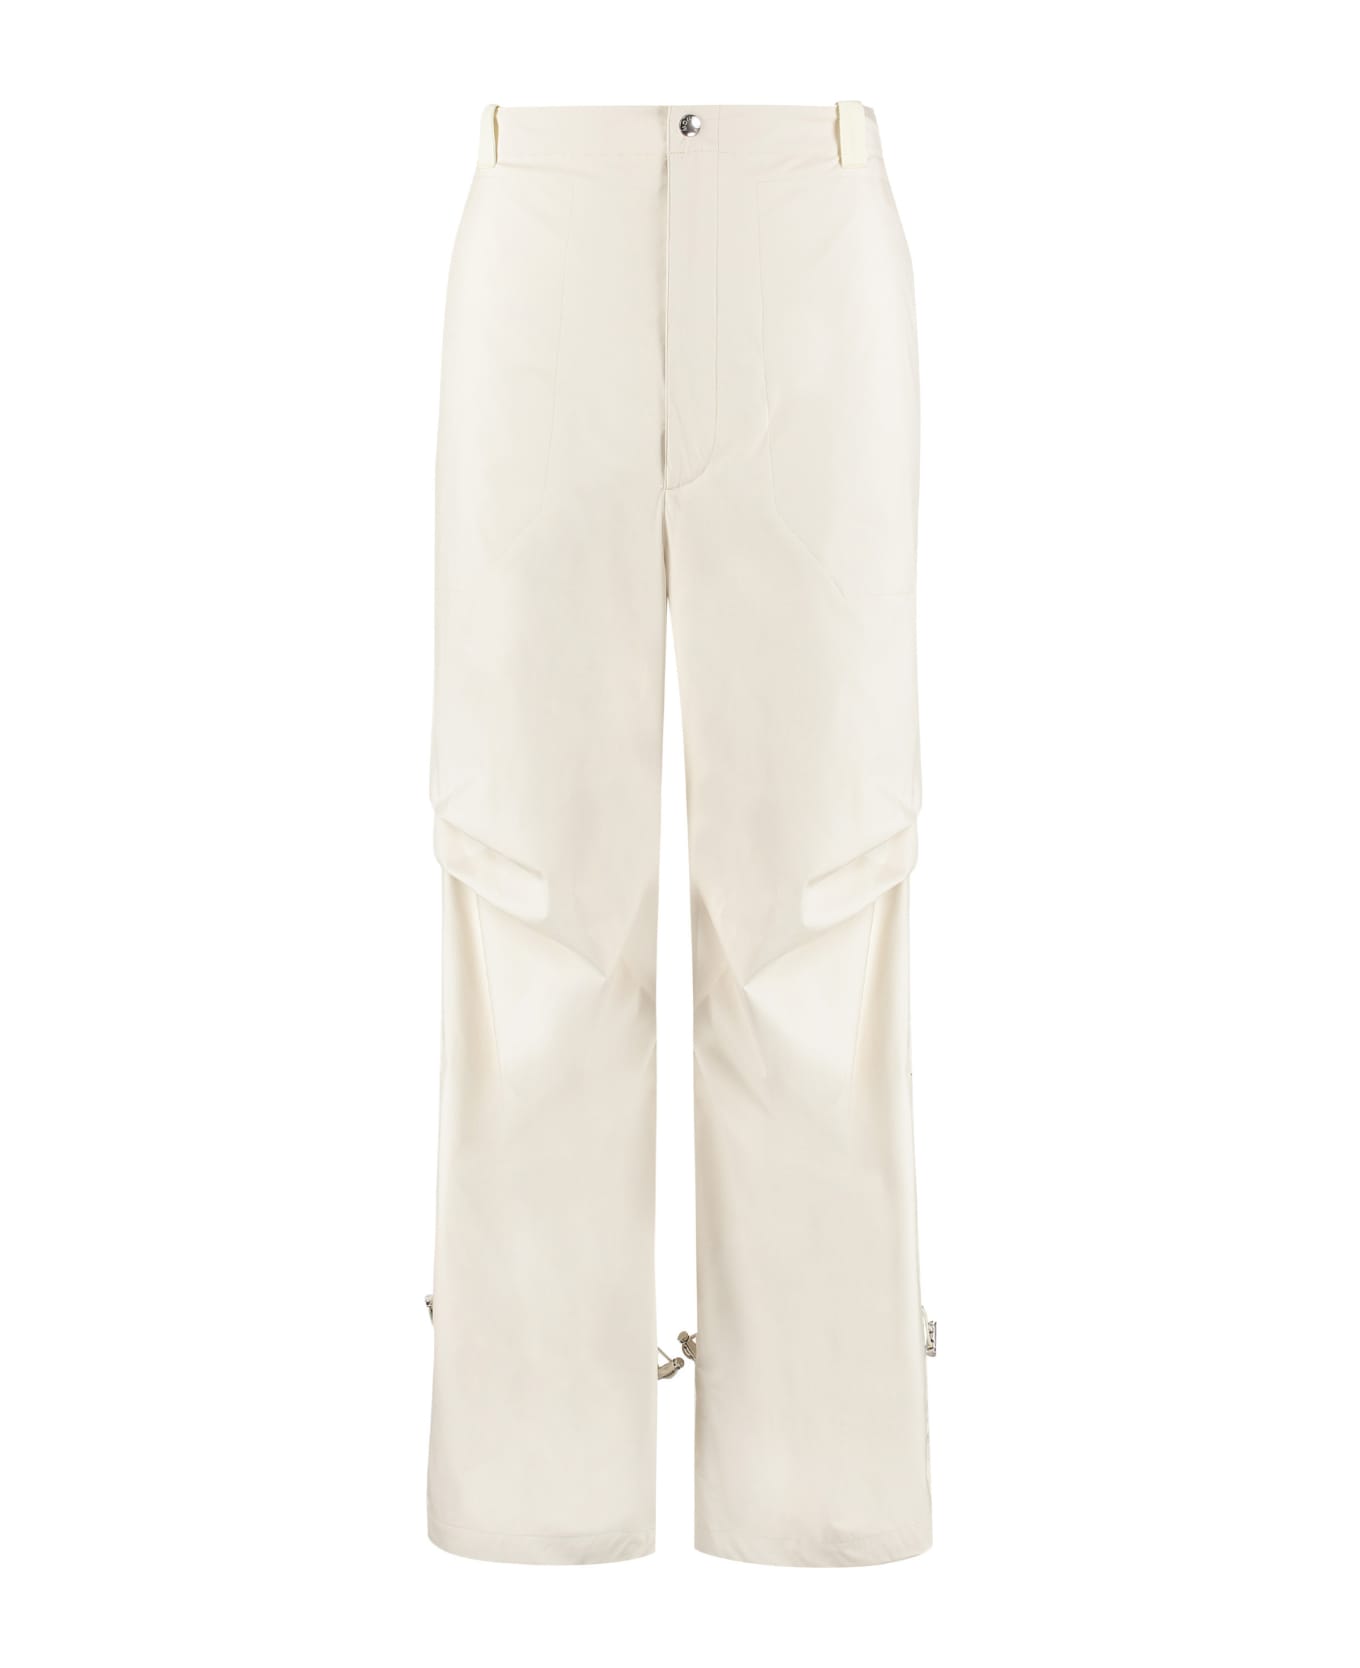 Moncler Genius 2 Moncler 1952 - Technical Fabric Pants - panna ボトムス